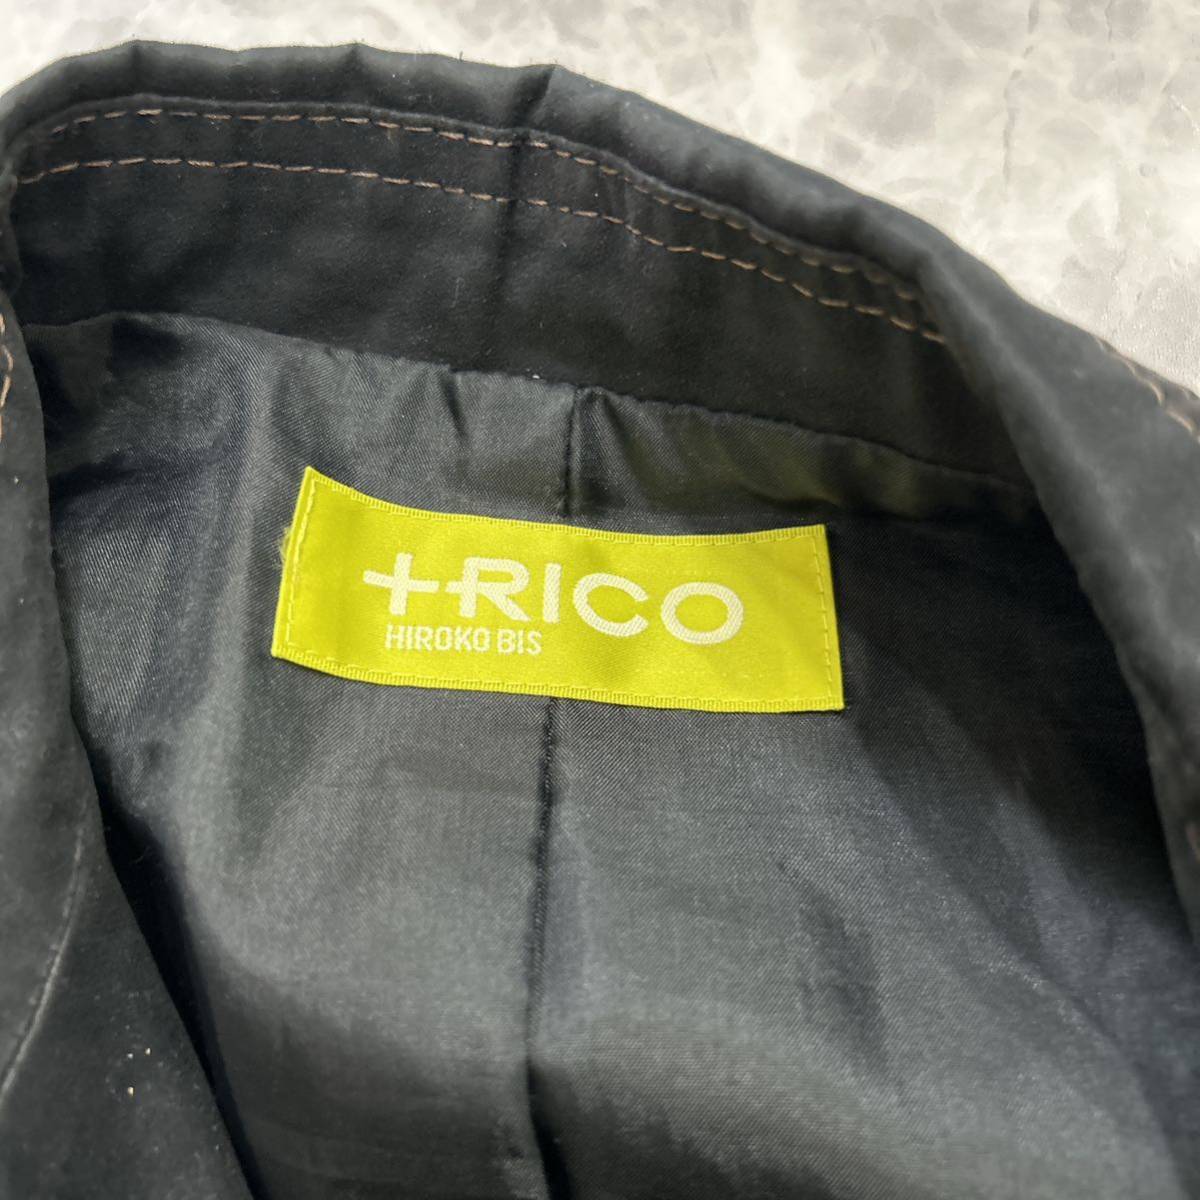 U @ 美品 '洗礼されたデザイン' +Rico HIROKO BIS ヒロコビス 長袖 薄手 シャツ ジャケット 9 レディース 婦人服 トップス BLACK 黒系_画像5